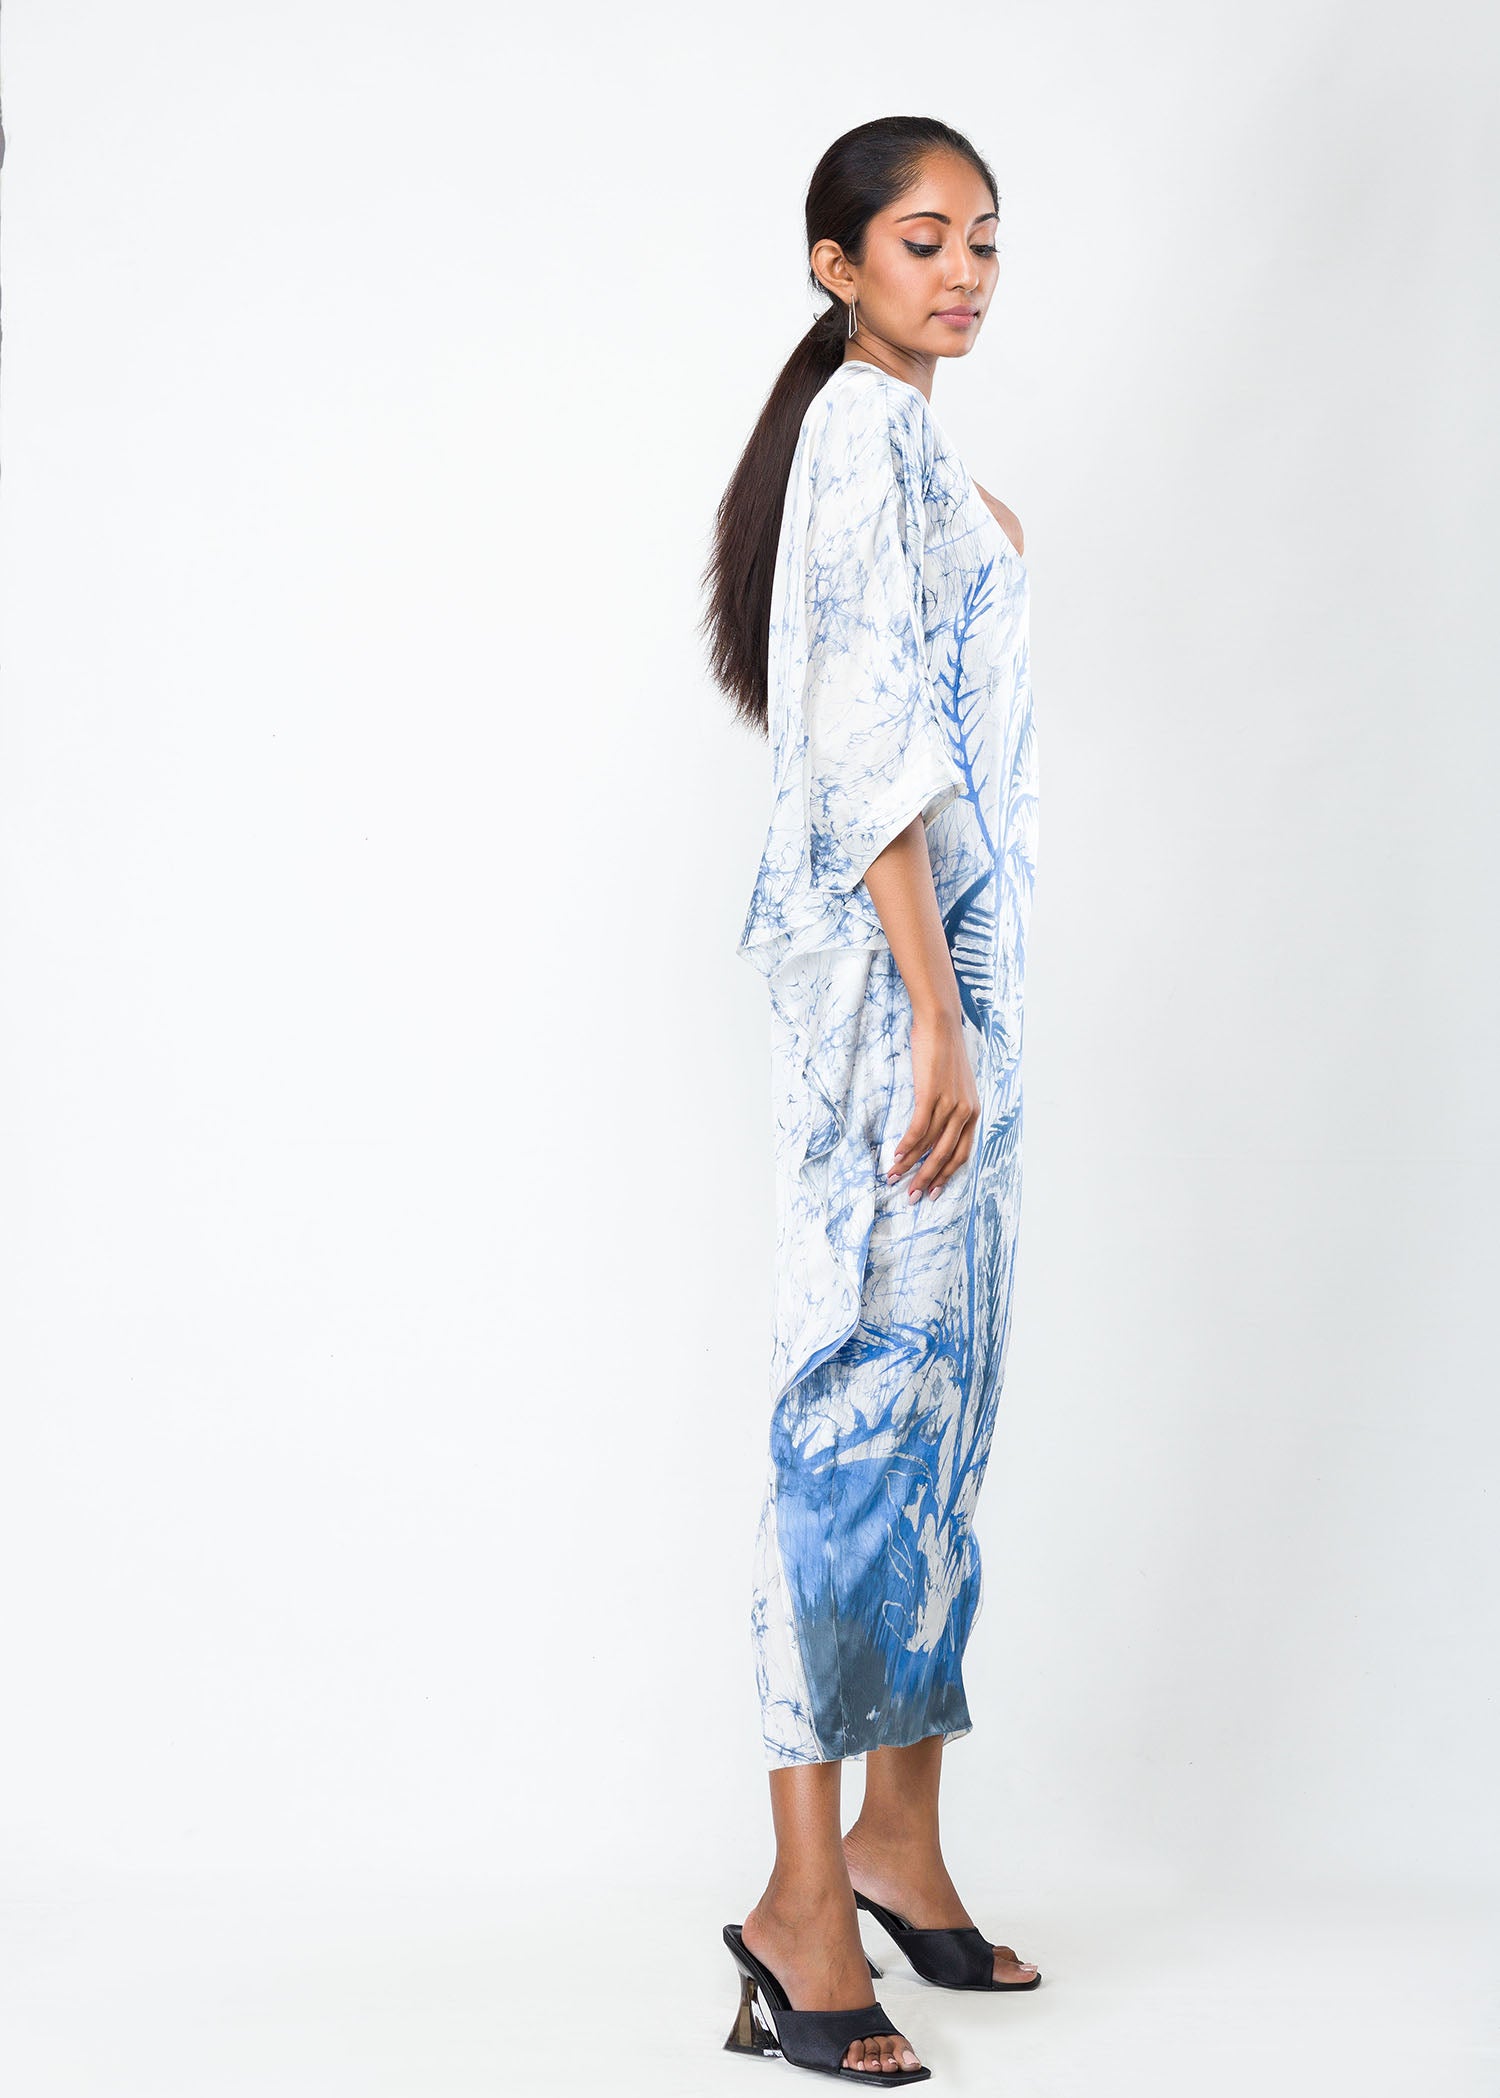 Tropical Print Batik Silk Dress